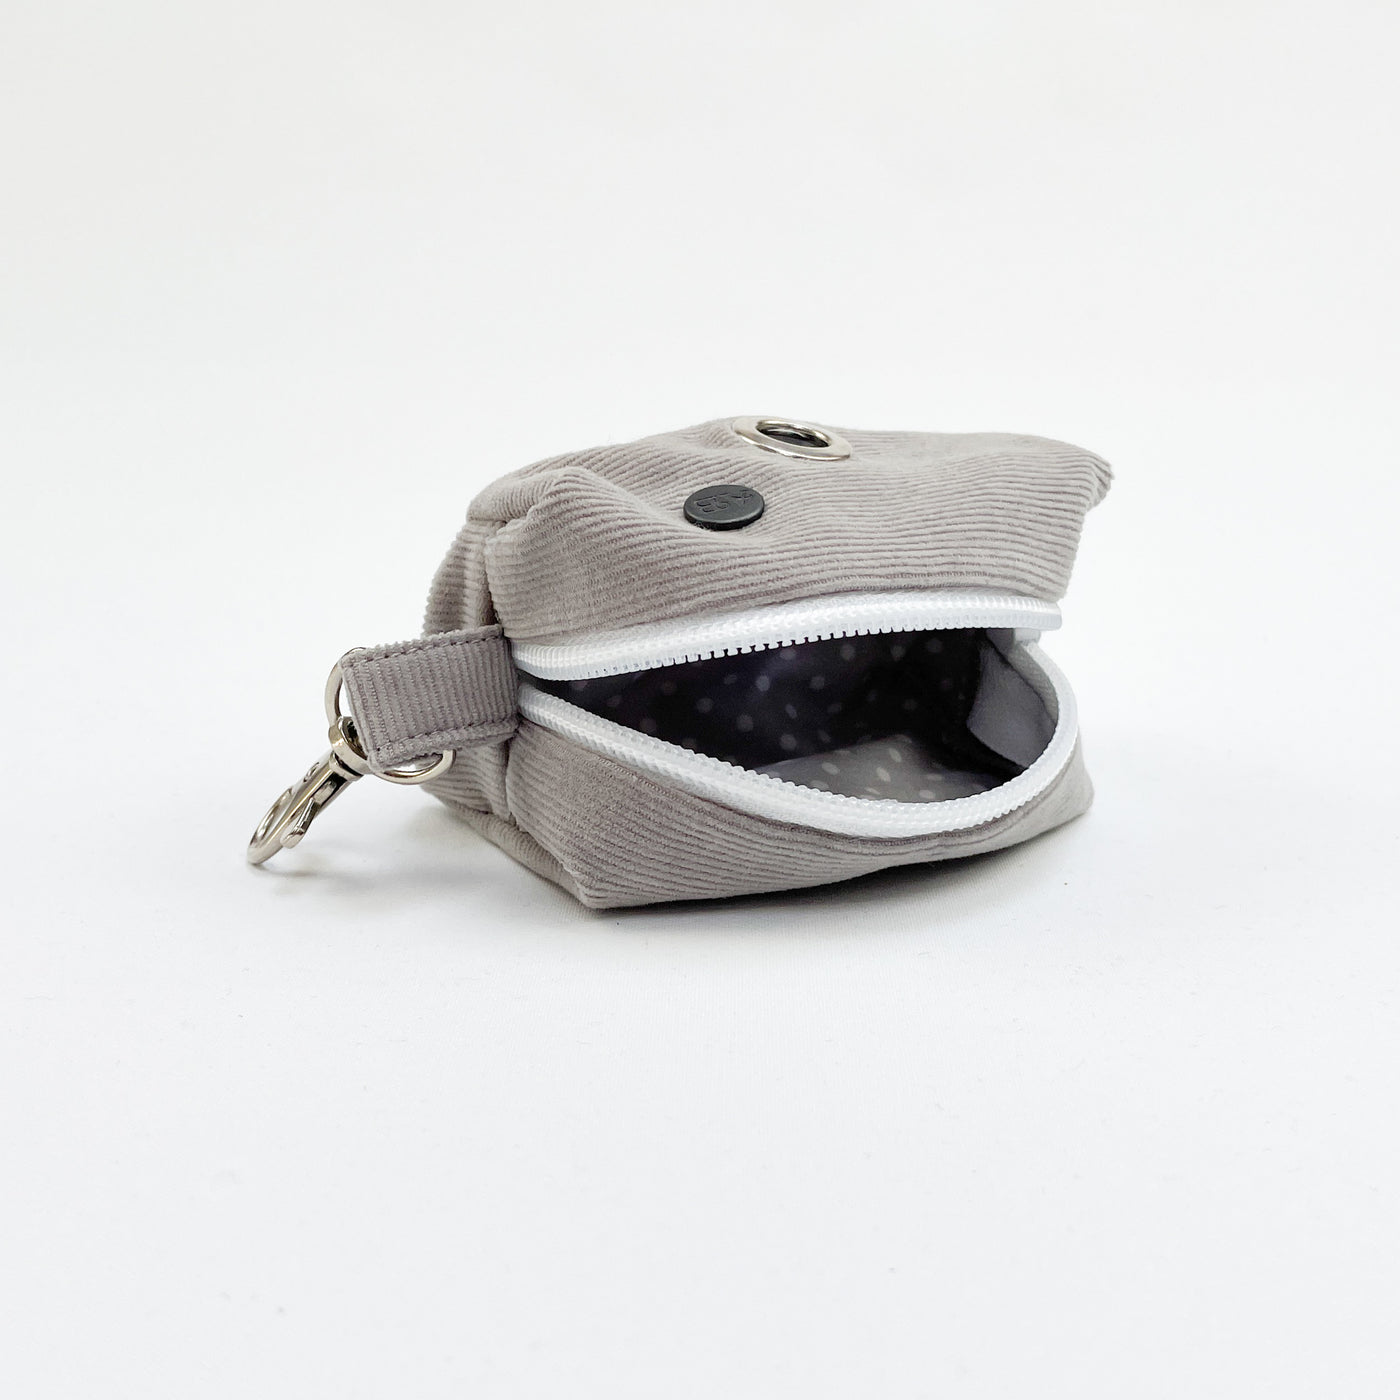 Grey corduroy poop bag holder open showing grey polka dot lining